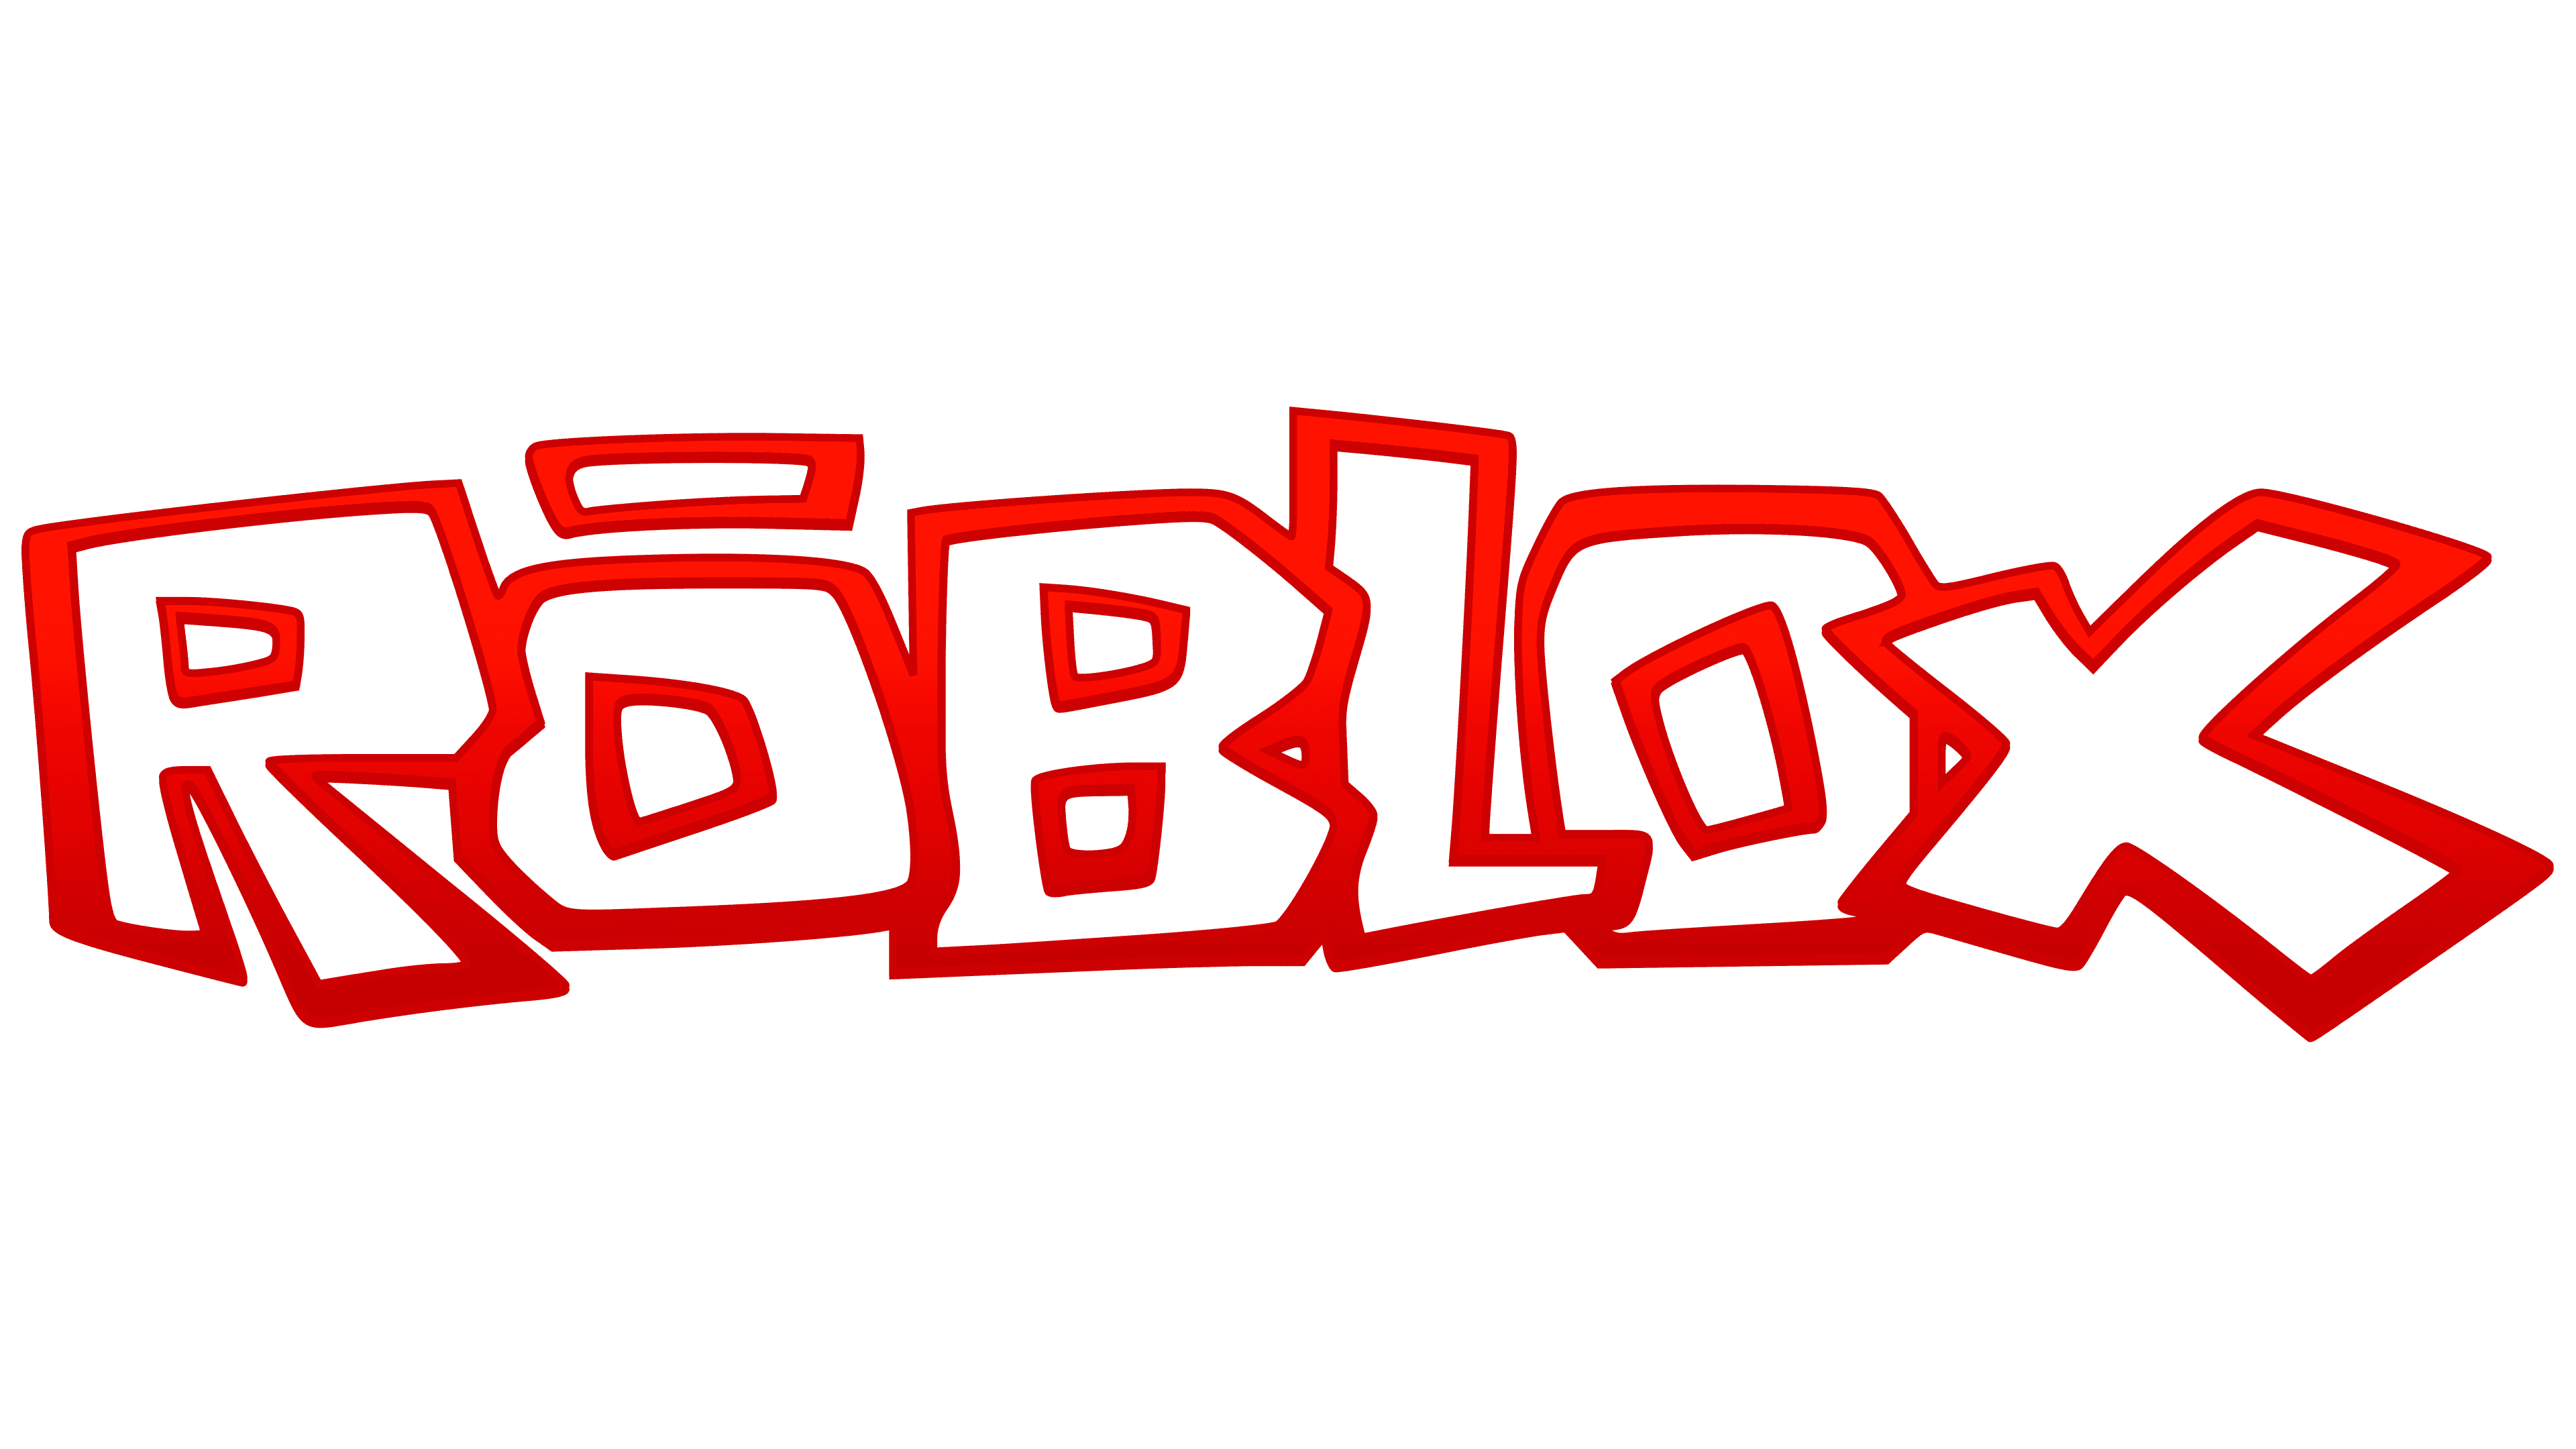 File:Roblox logo 2015.png - Wikipedia